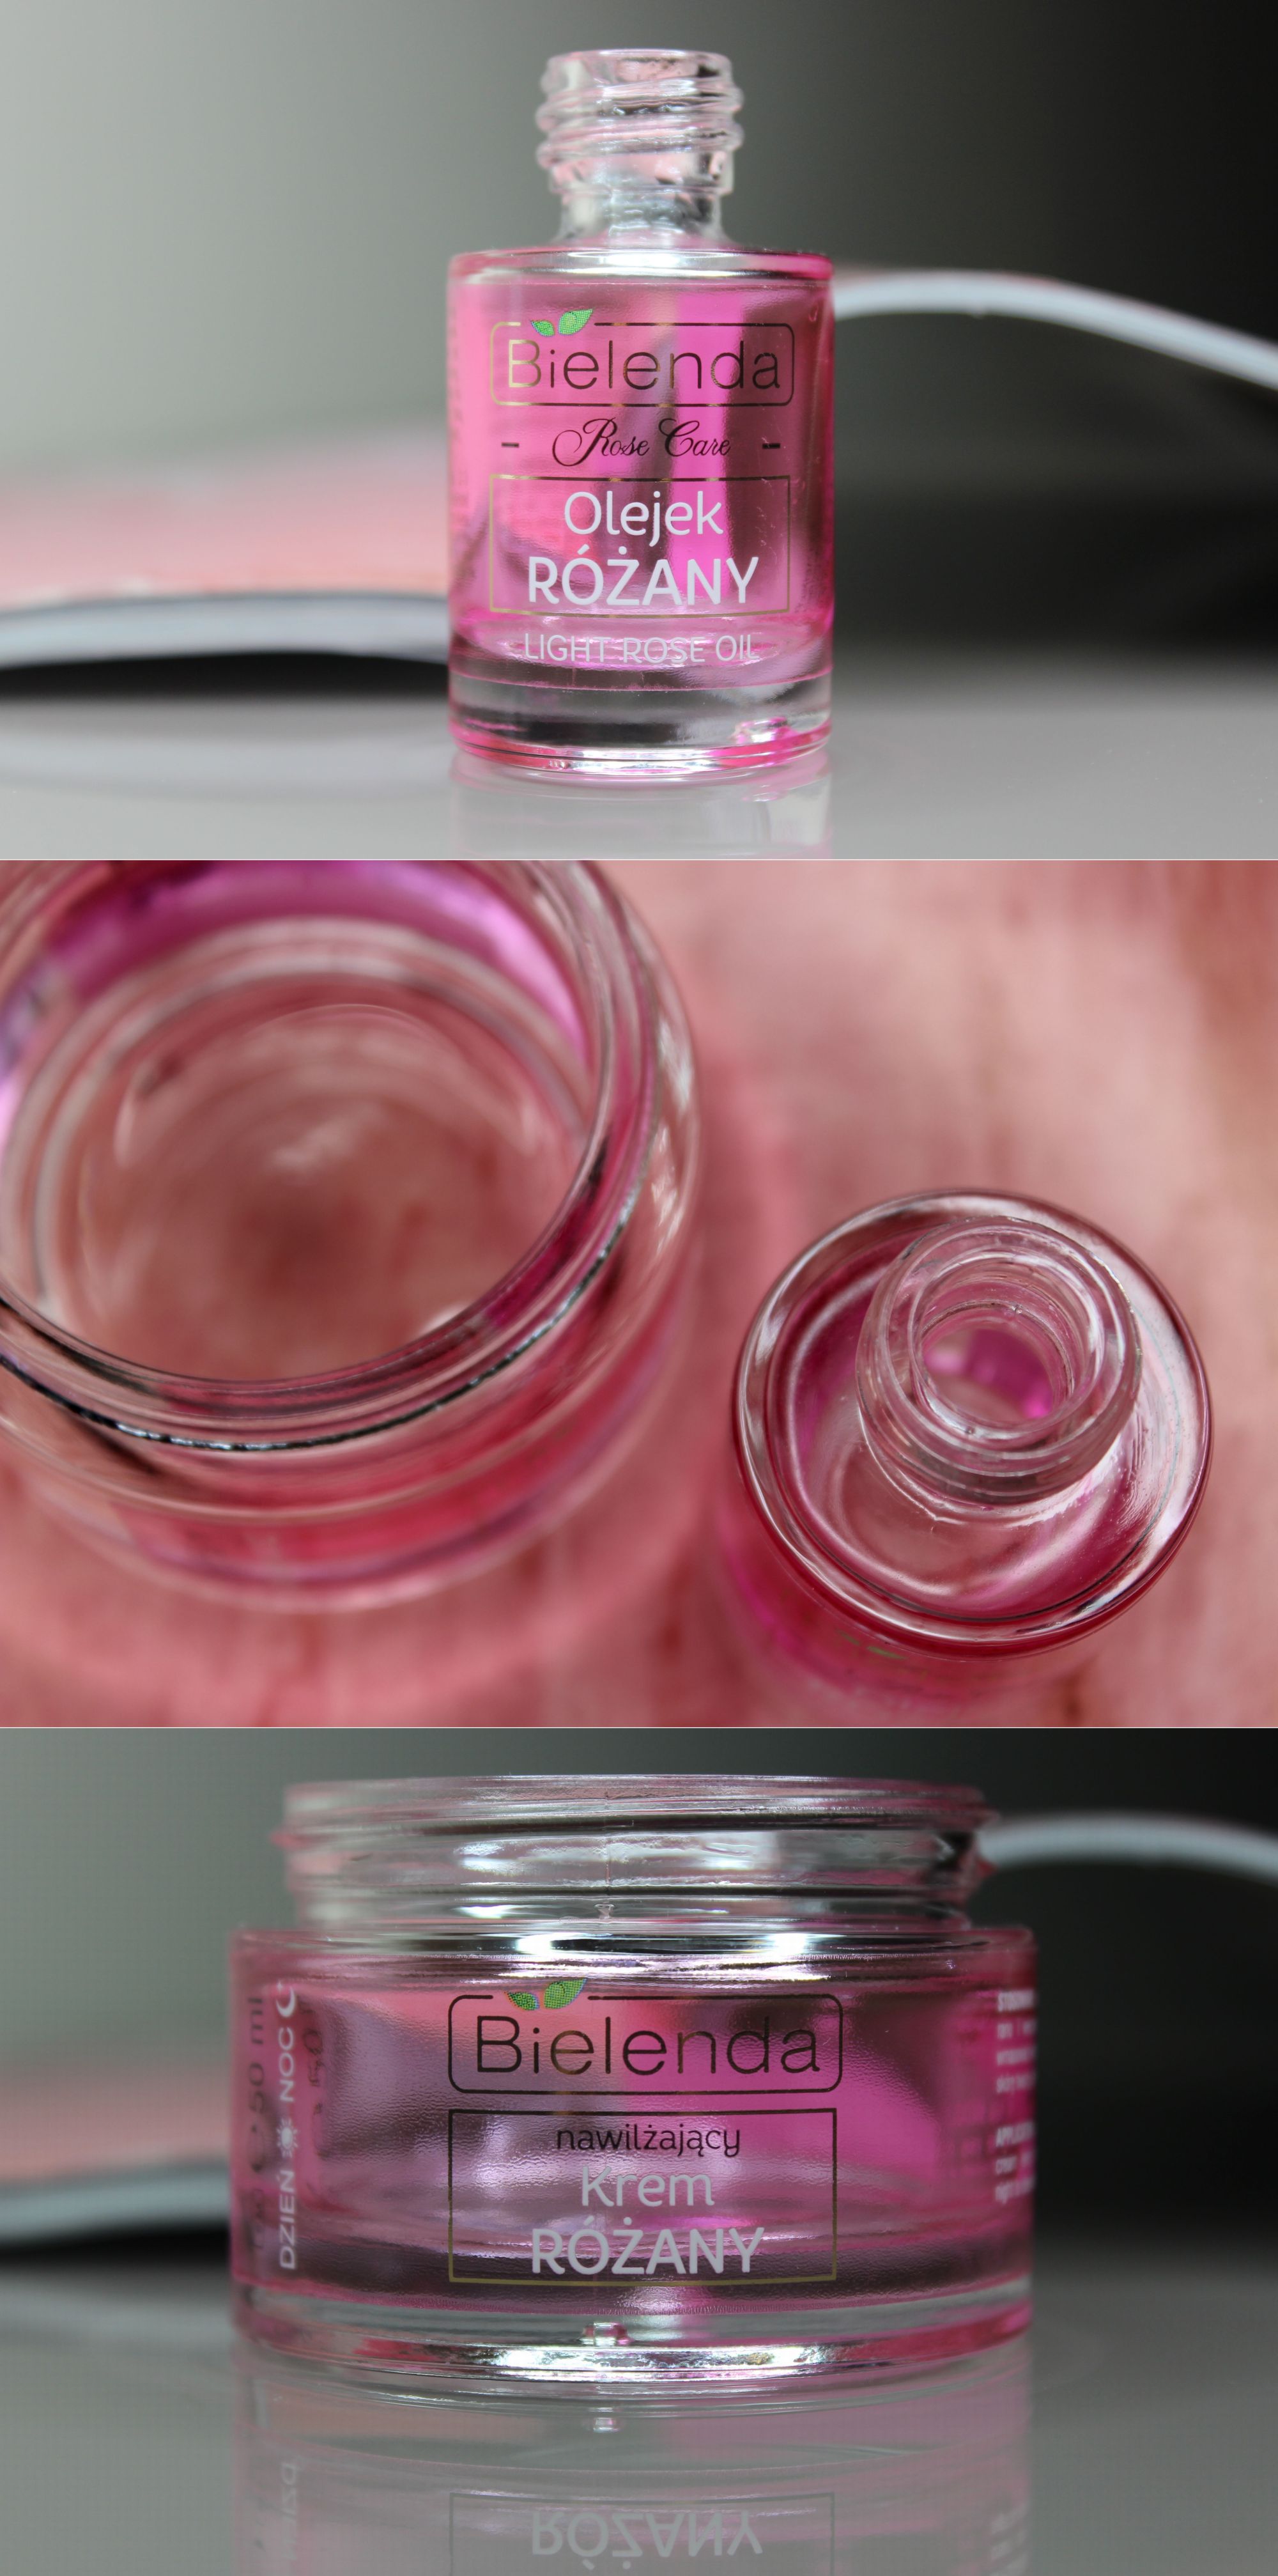 Bielenda Rose Care Light Rose Oil & Hydrating Rose Cream